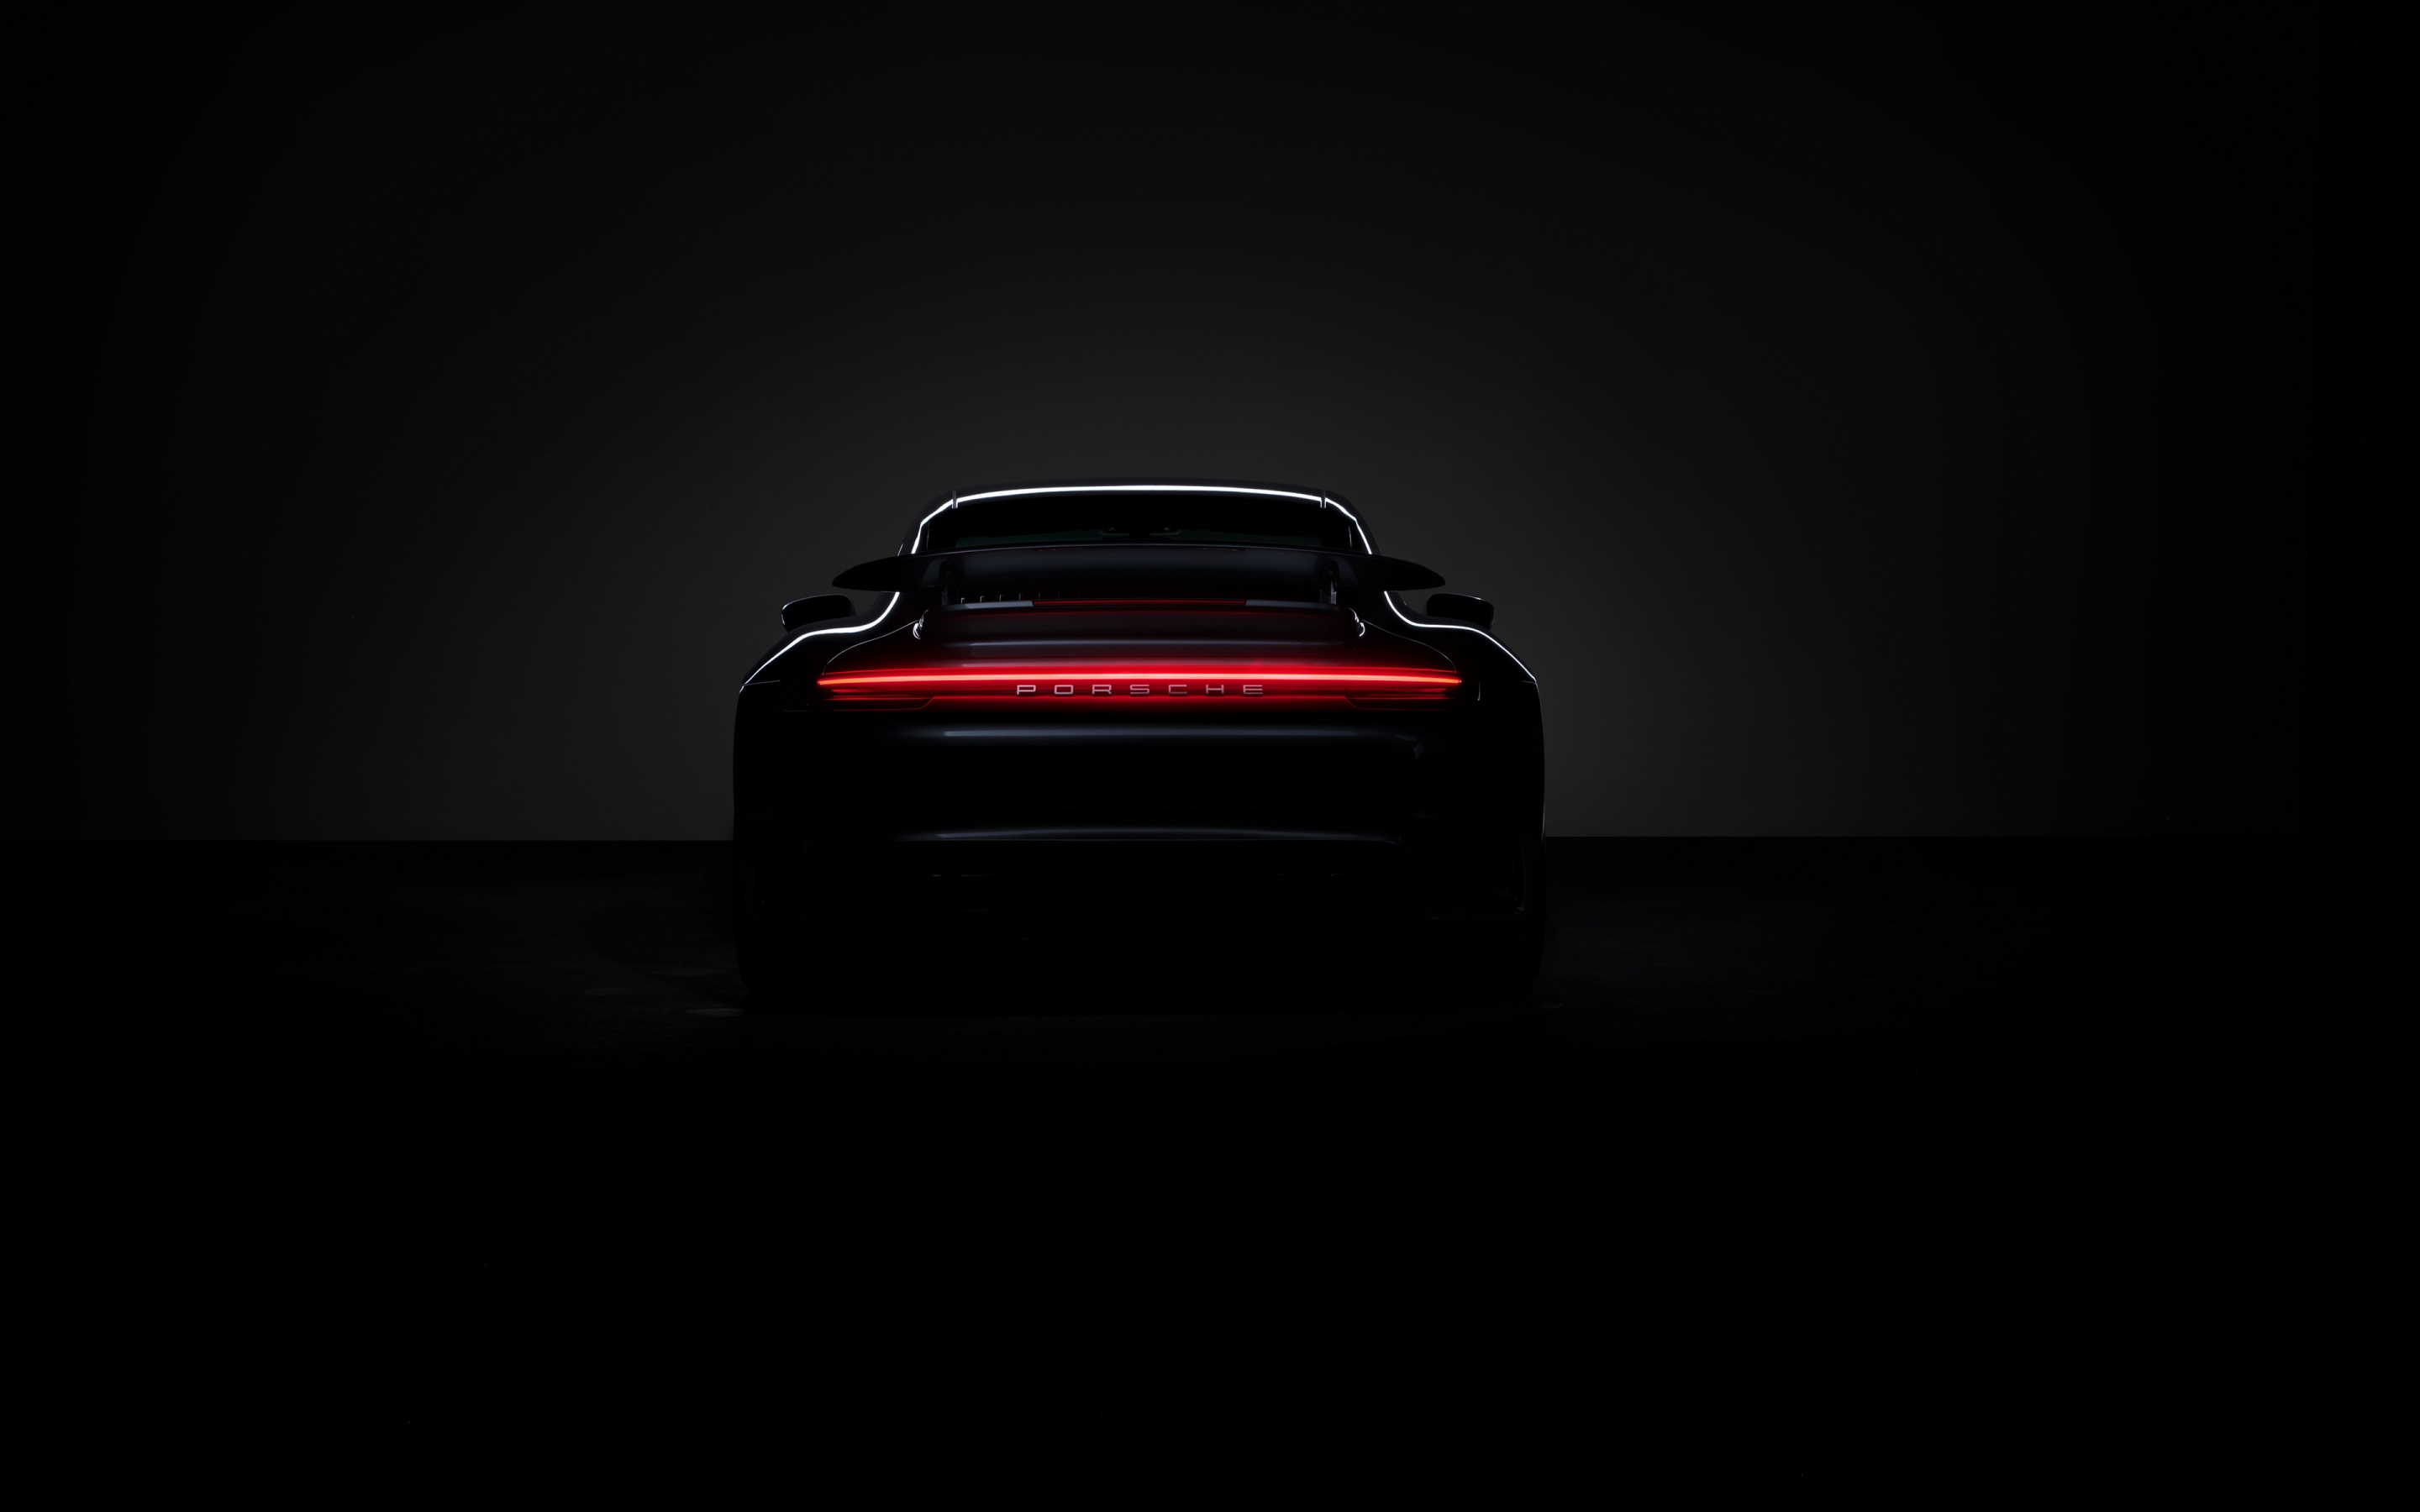 Porsche 911 Turbo S Wallpaper 4K, Black background, Black/Dark, #7730